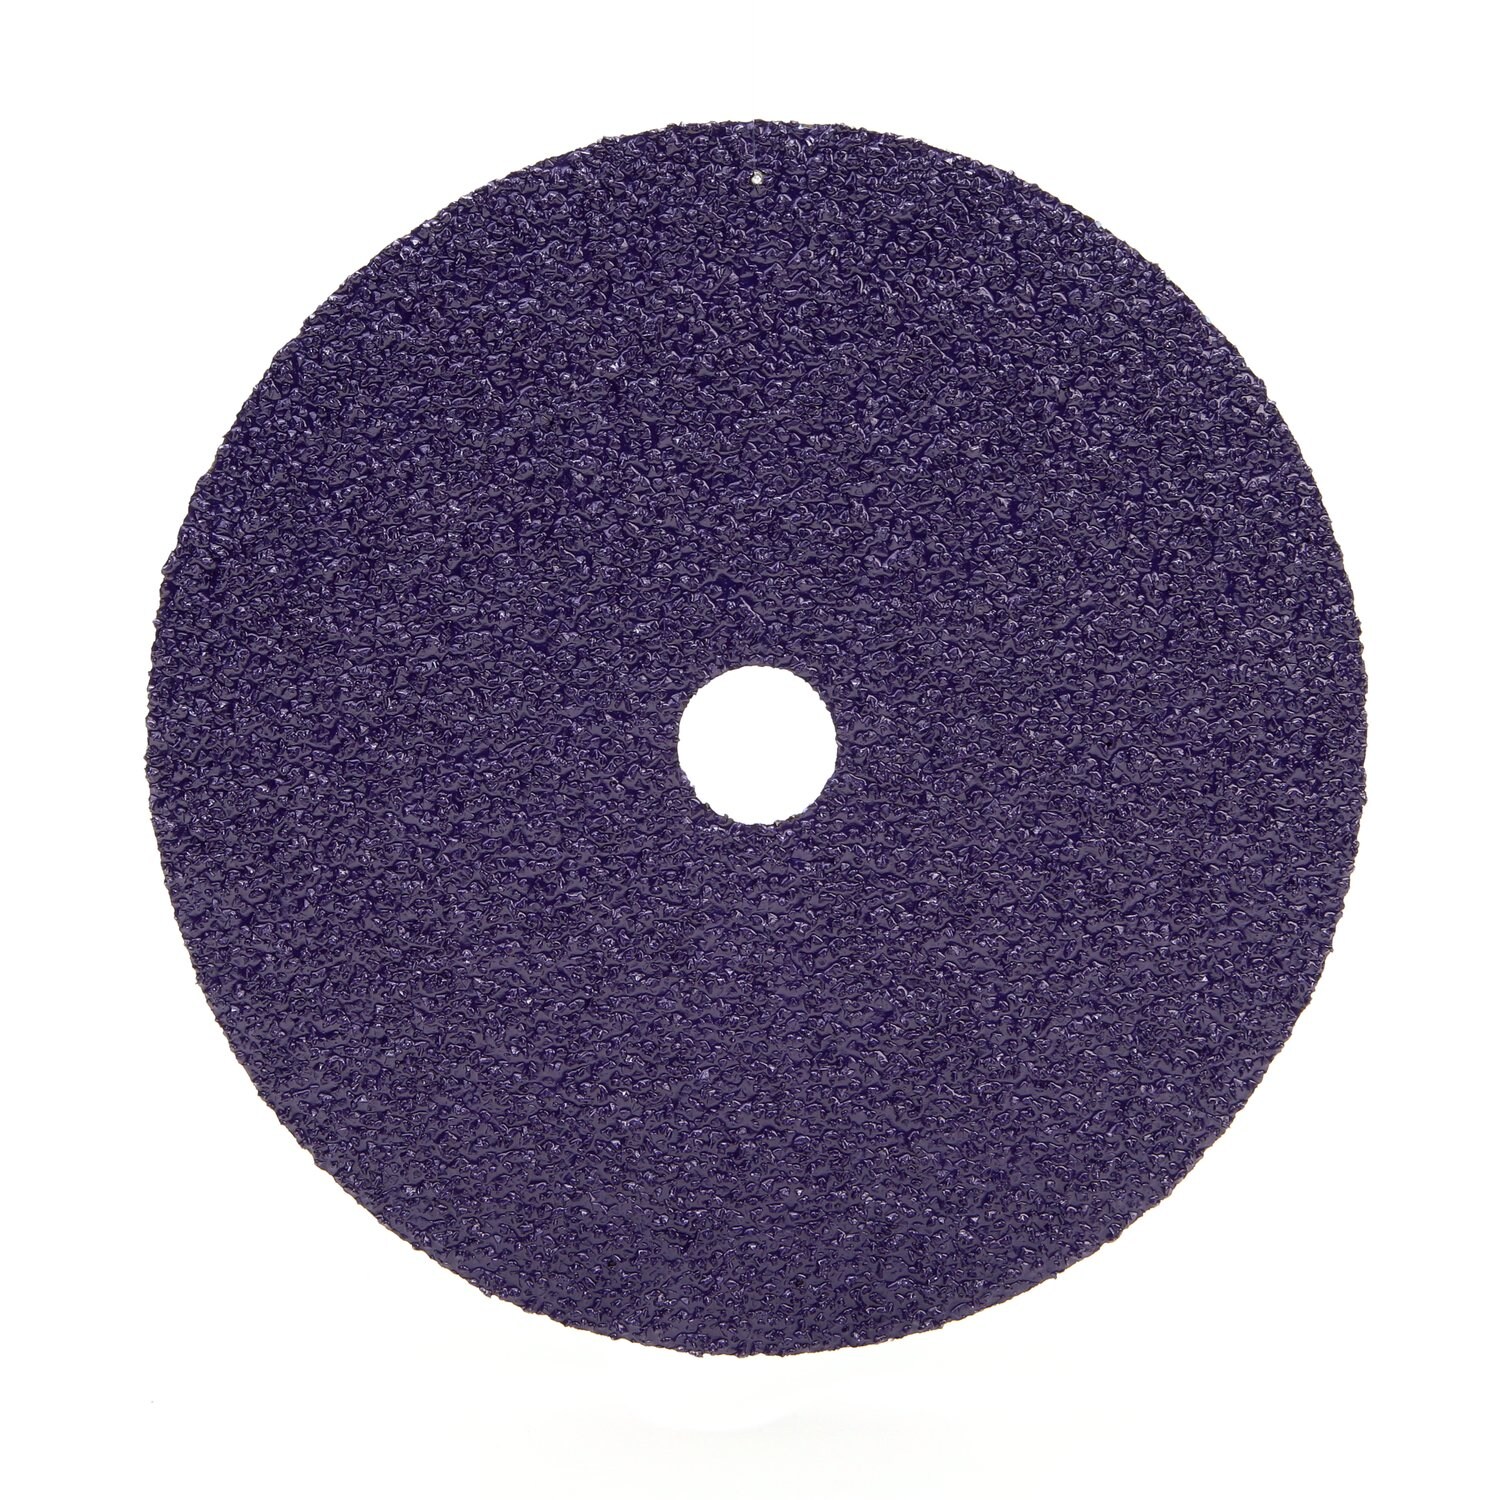 7100033178 - 3M Cubitron II Abrasive Fibre Disc, 33425, 7 in x 7/8 in (180mm x
22mm), 36+, 5 discs per carton, 5 cartons per case